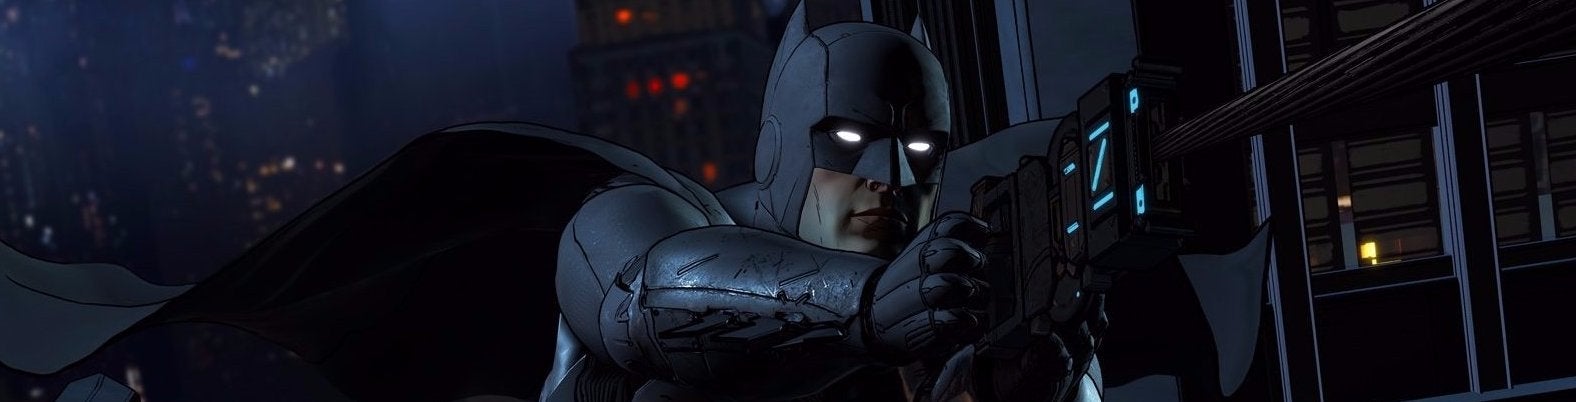 Image for Jak funguje multiplayer v adventurním Batmanovi?